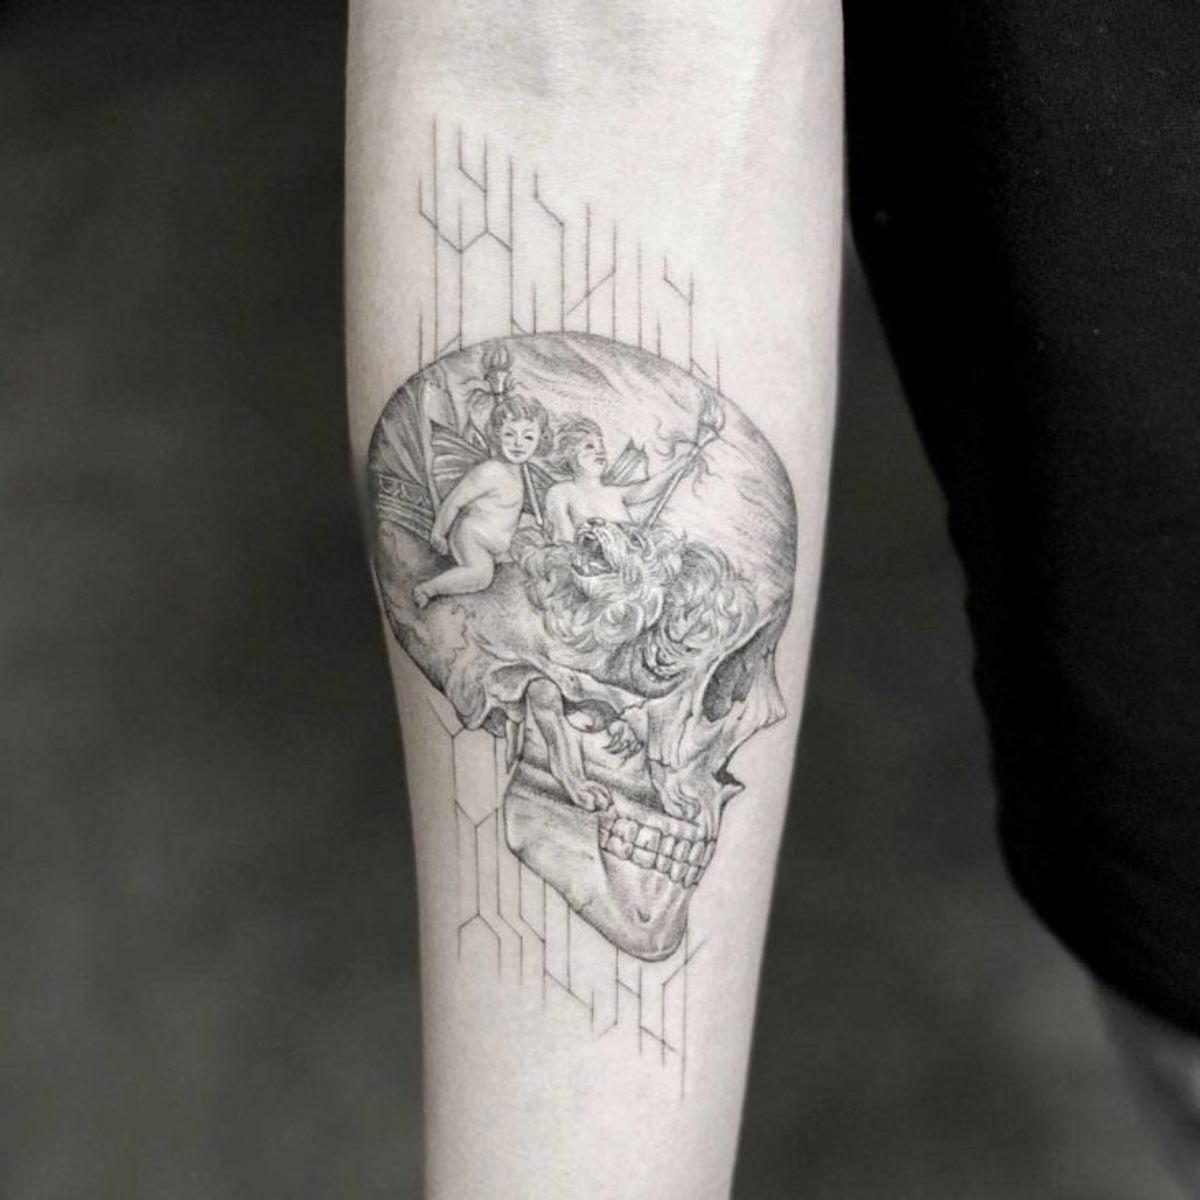 Myšlenky-Skull-Tattoo-by-Mr.K-728x728